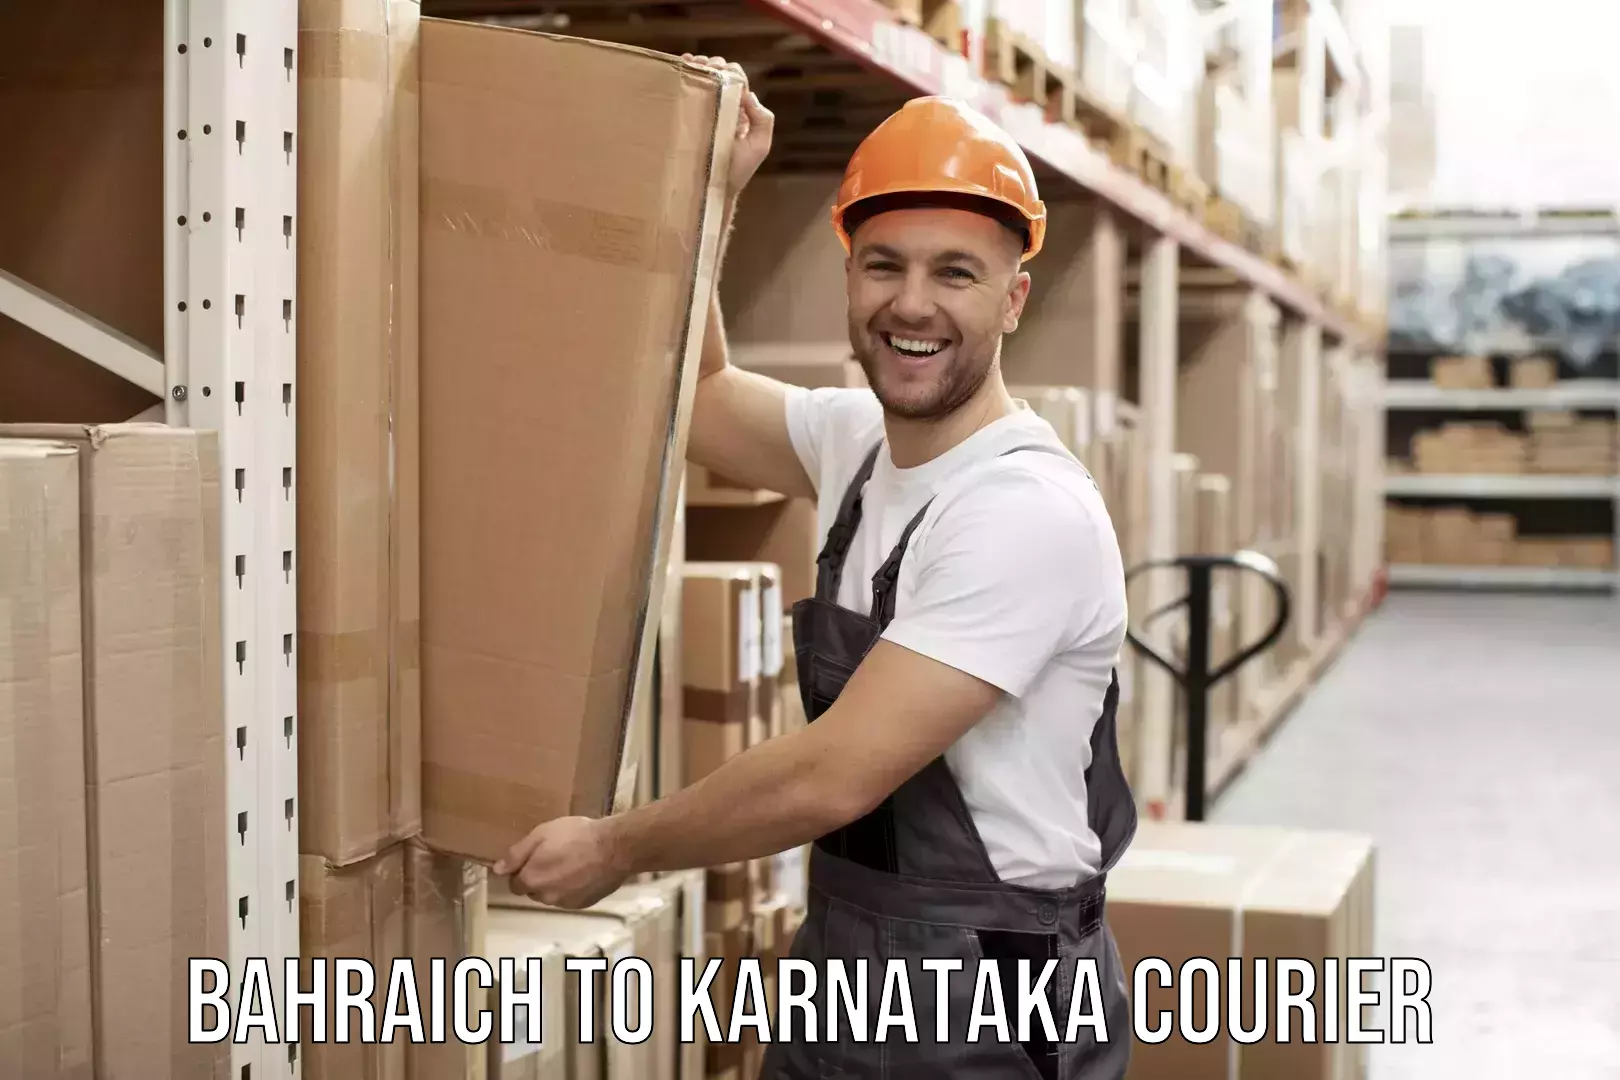 Home relocation experts Bahraich to Karnataka